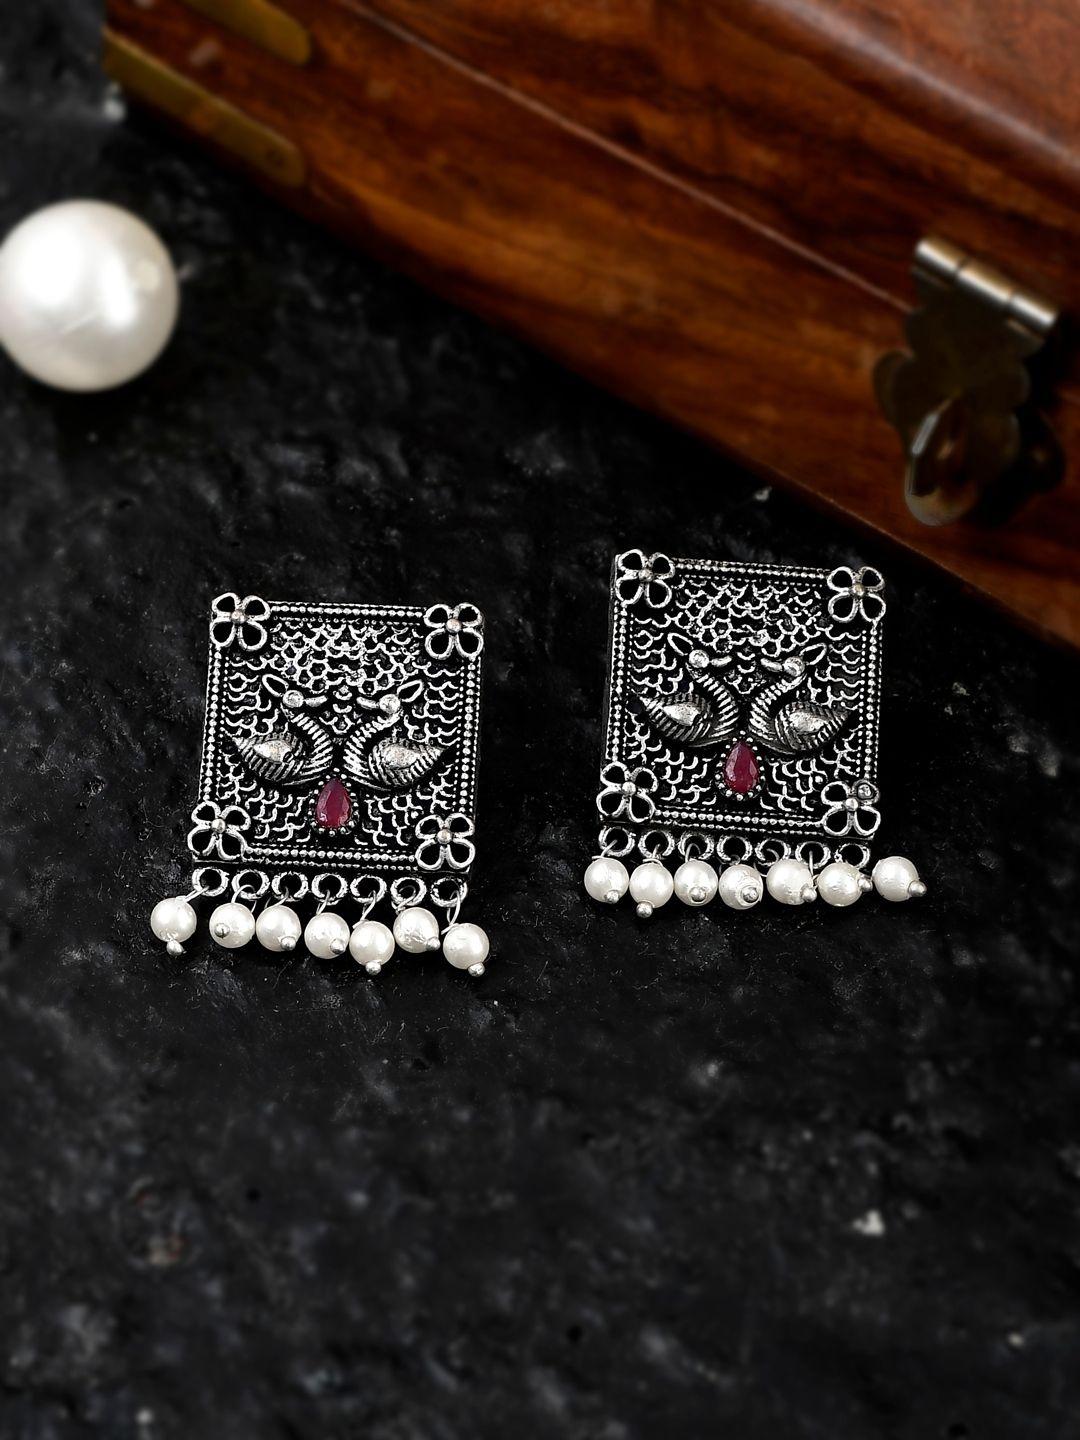 aquastreet jewels silver-plated peacock shapped drop earrings